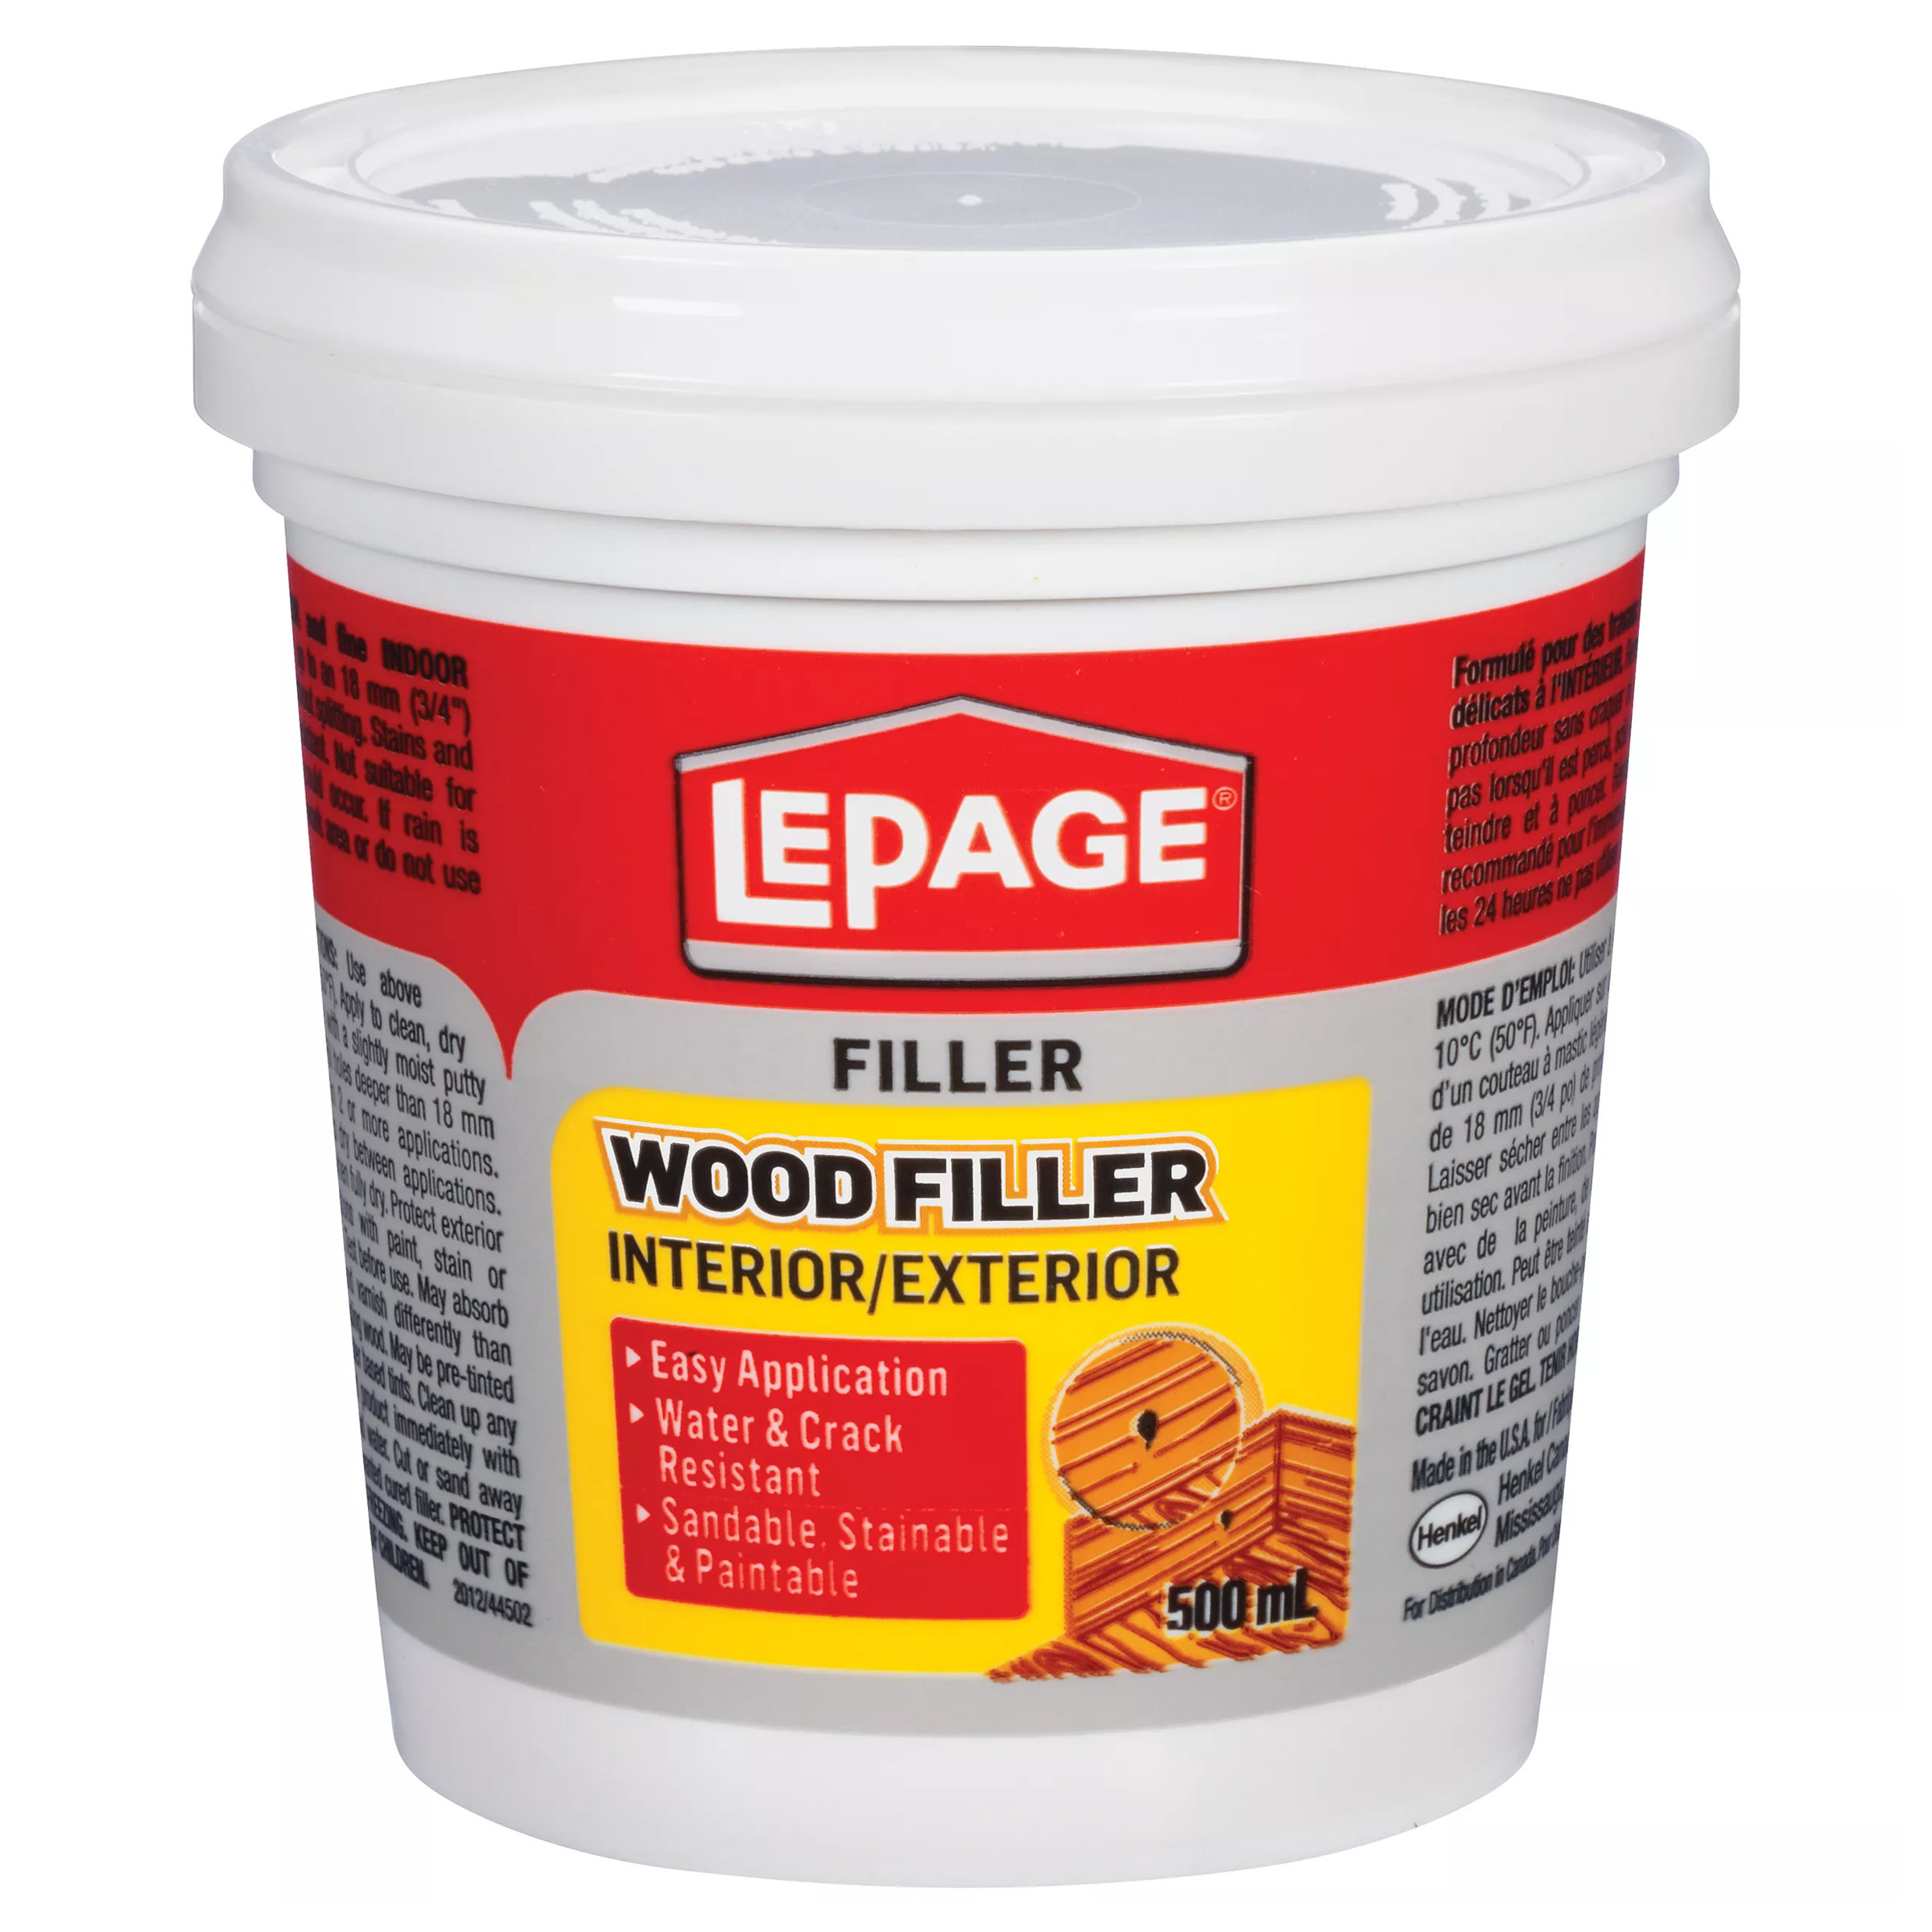 LePage Interior/Exterior Wood Filler, Light Tan, 500 ml Tub, Pack of 1